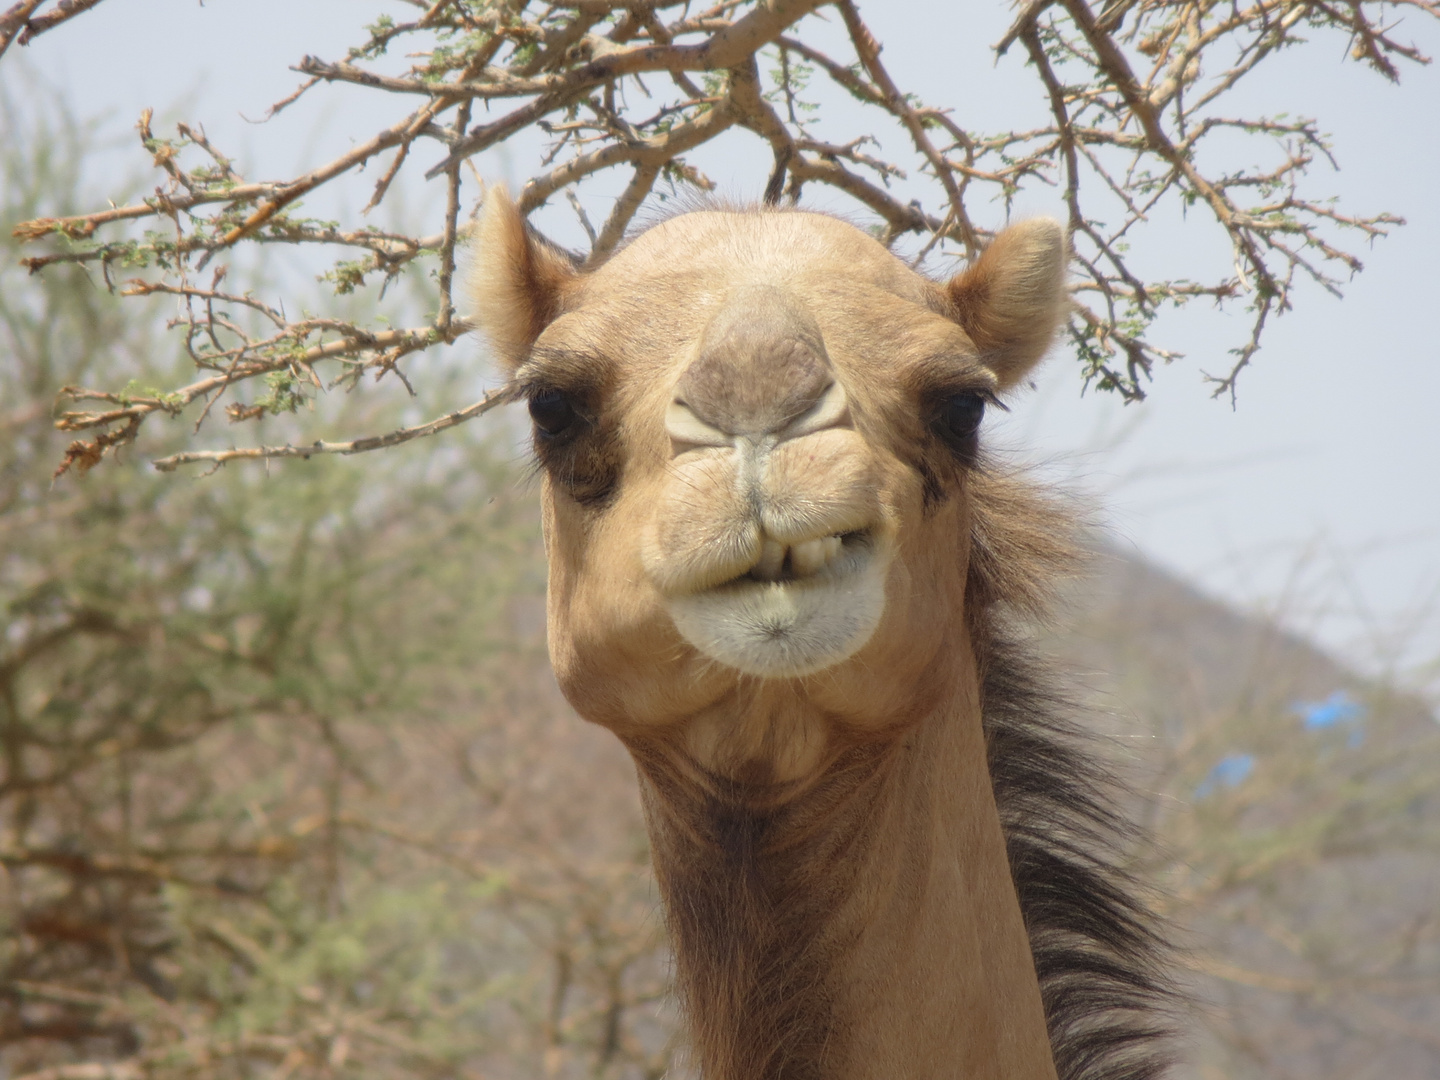 The happy camel